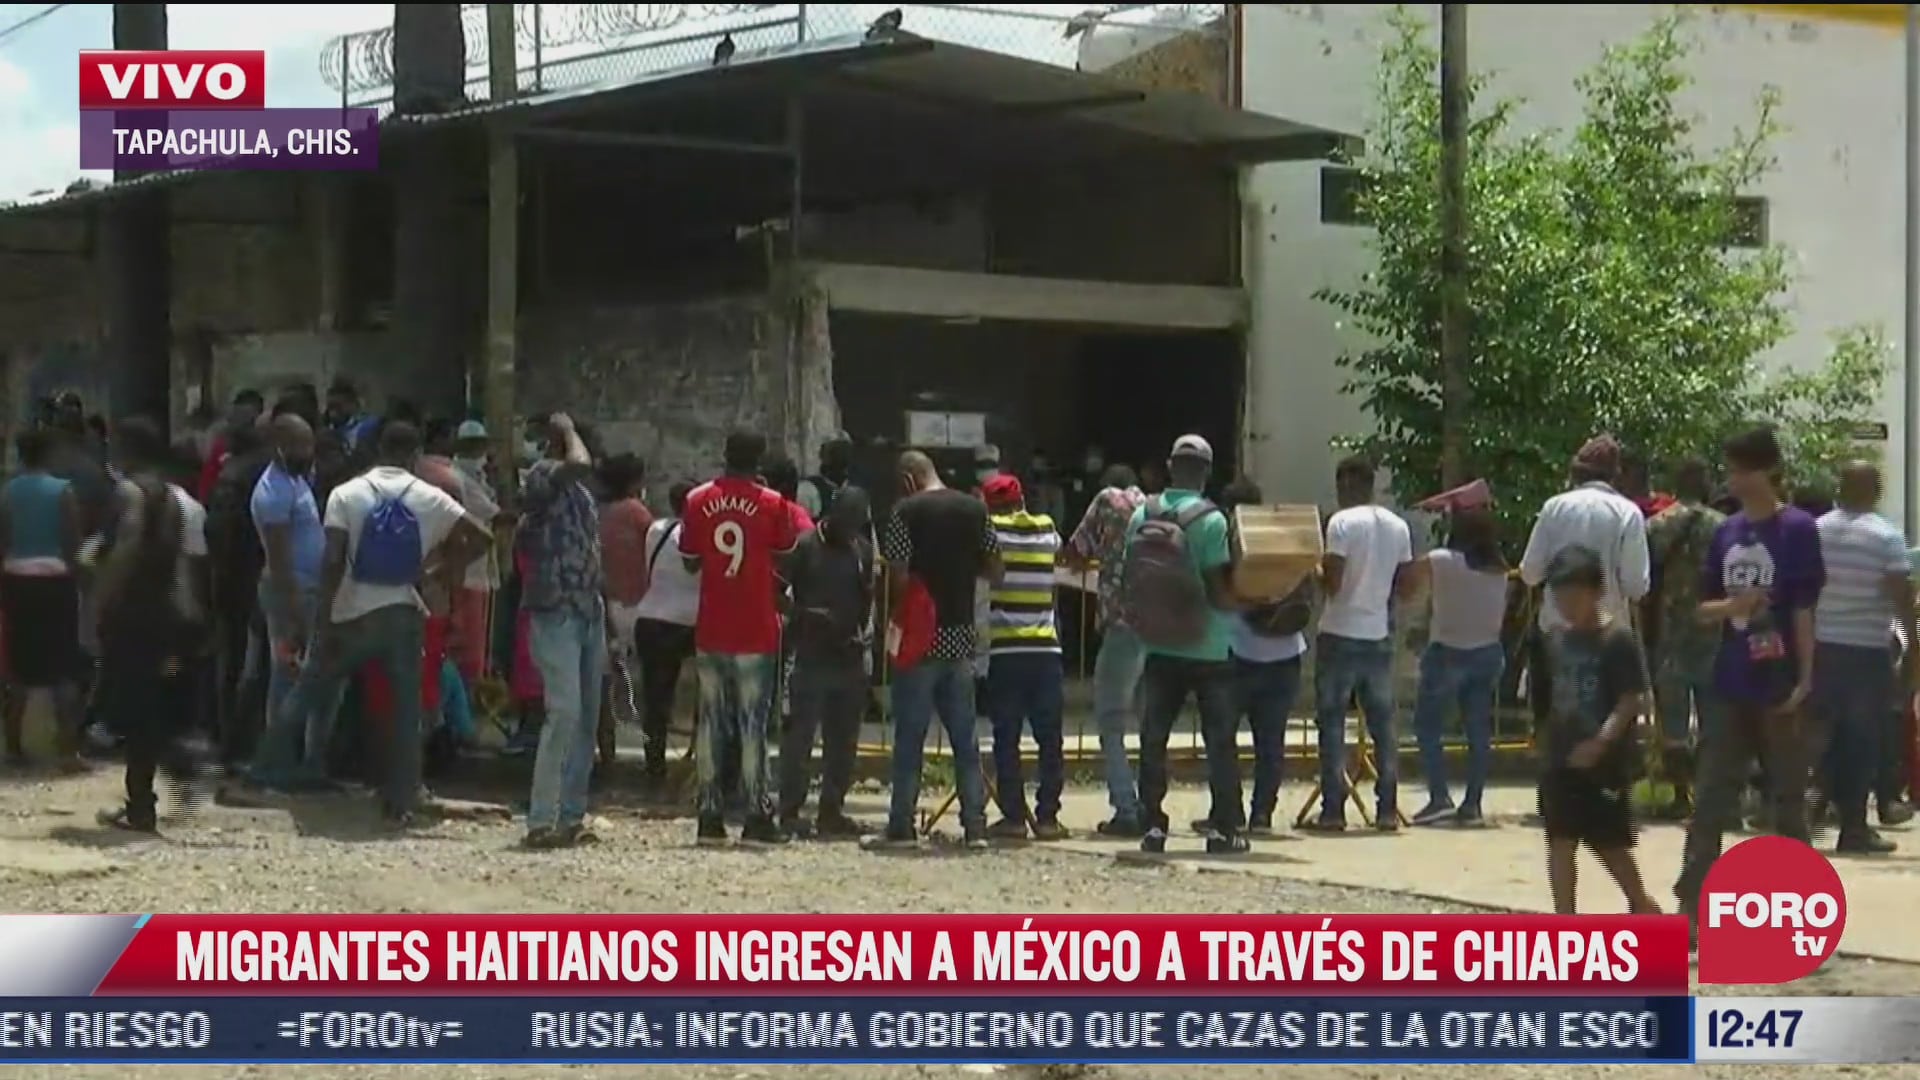 migrantes haitianos ingresan a mexico a traves de chiapas